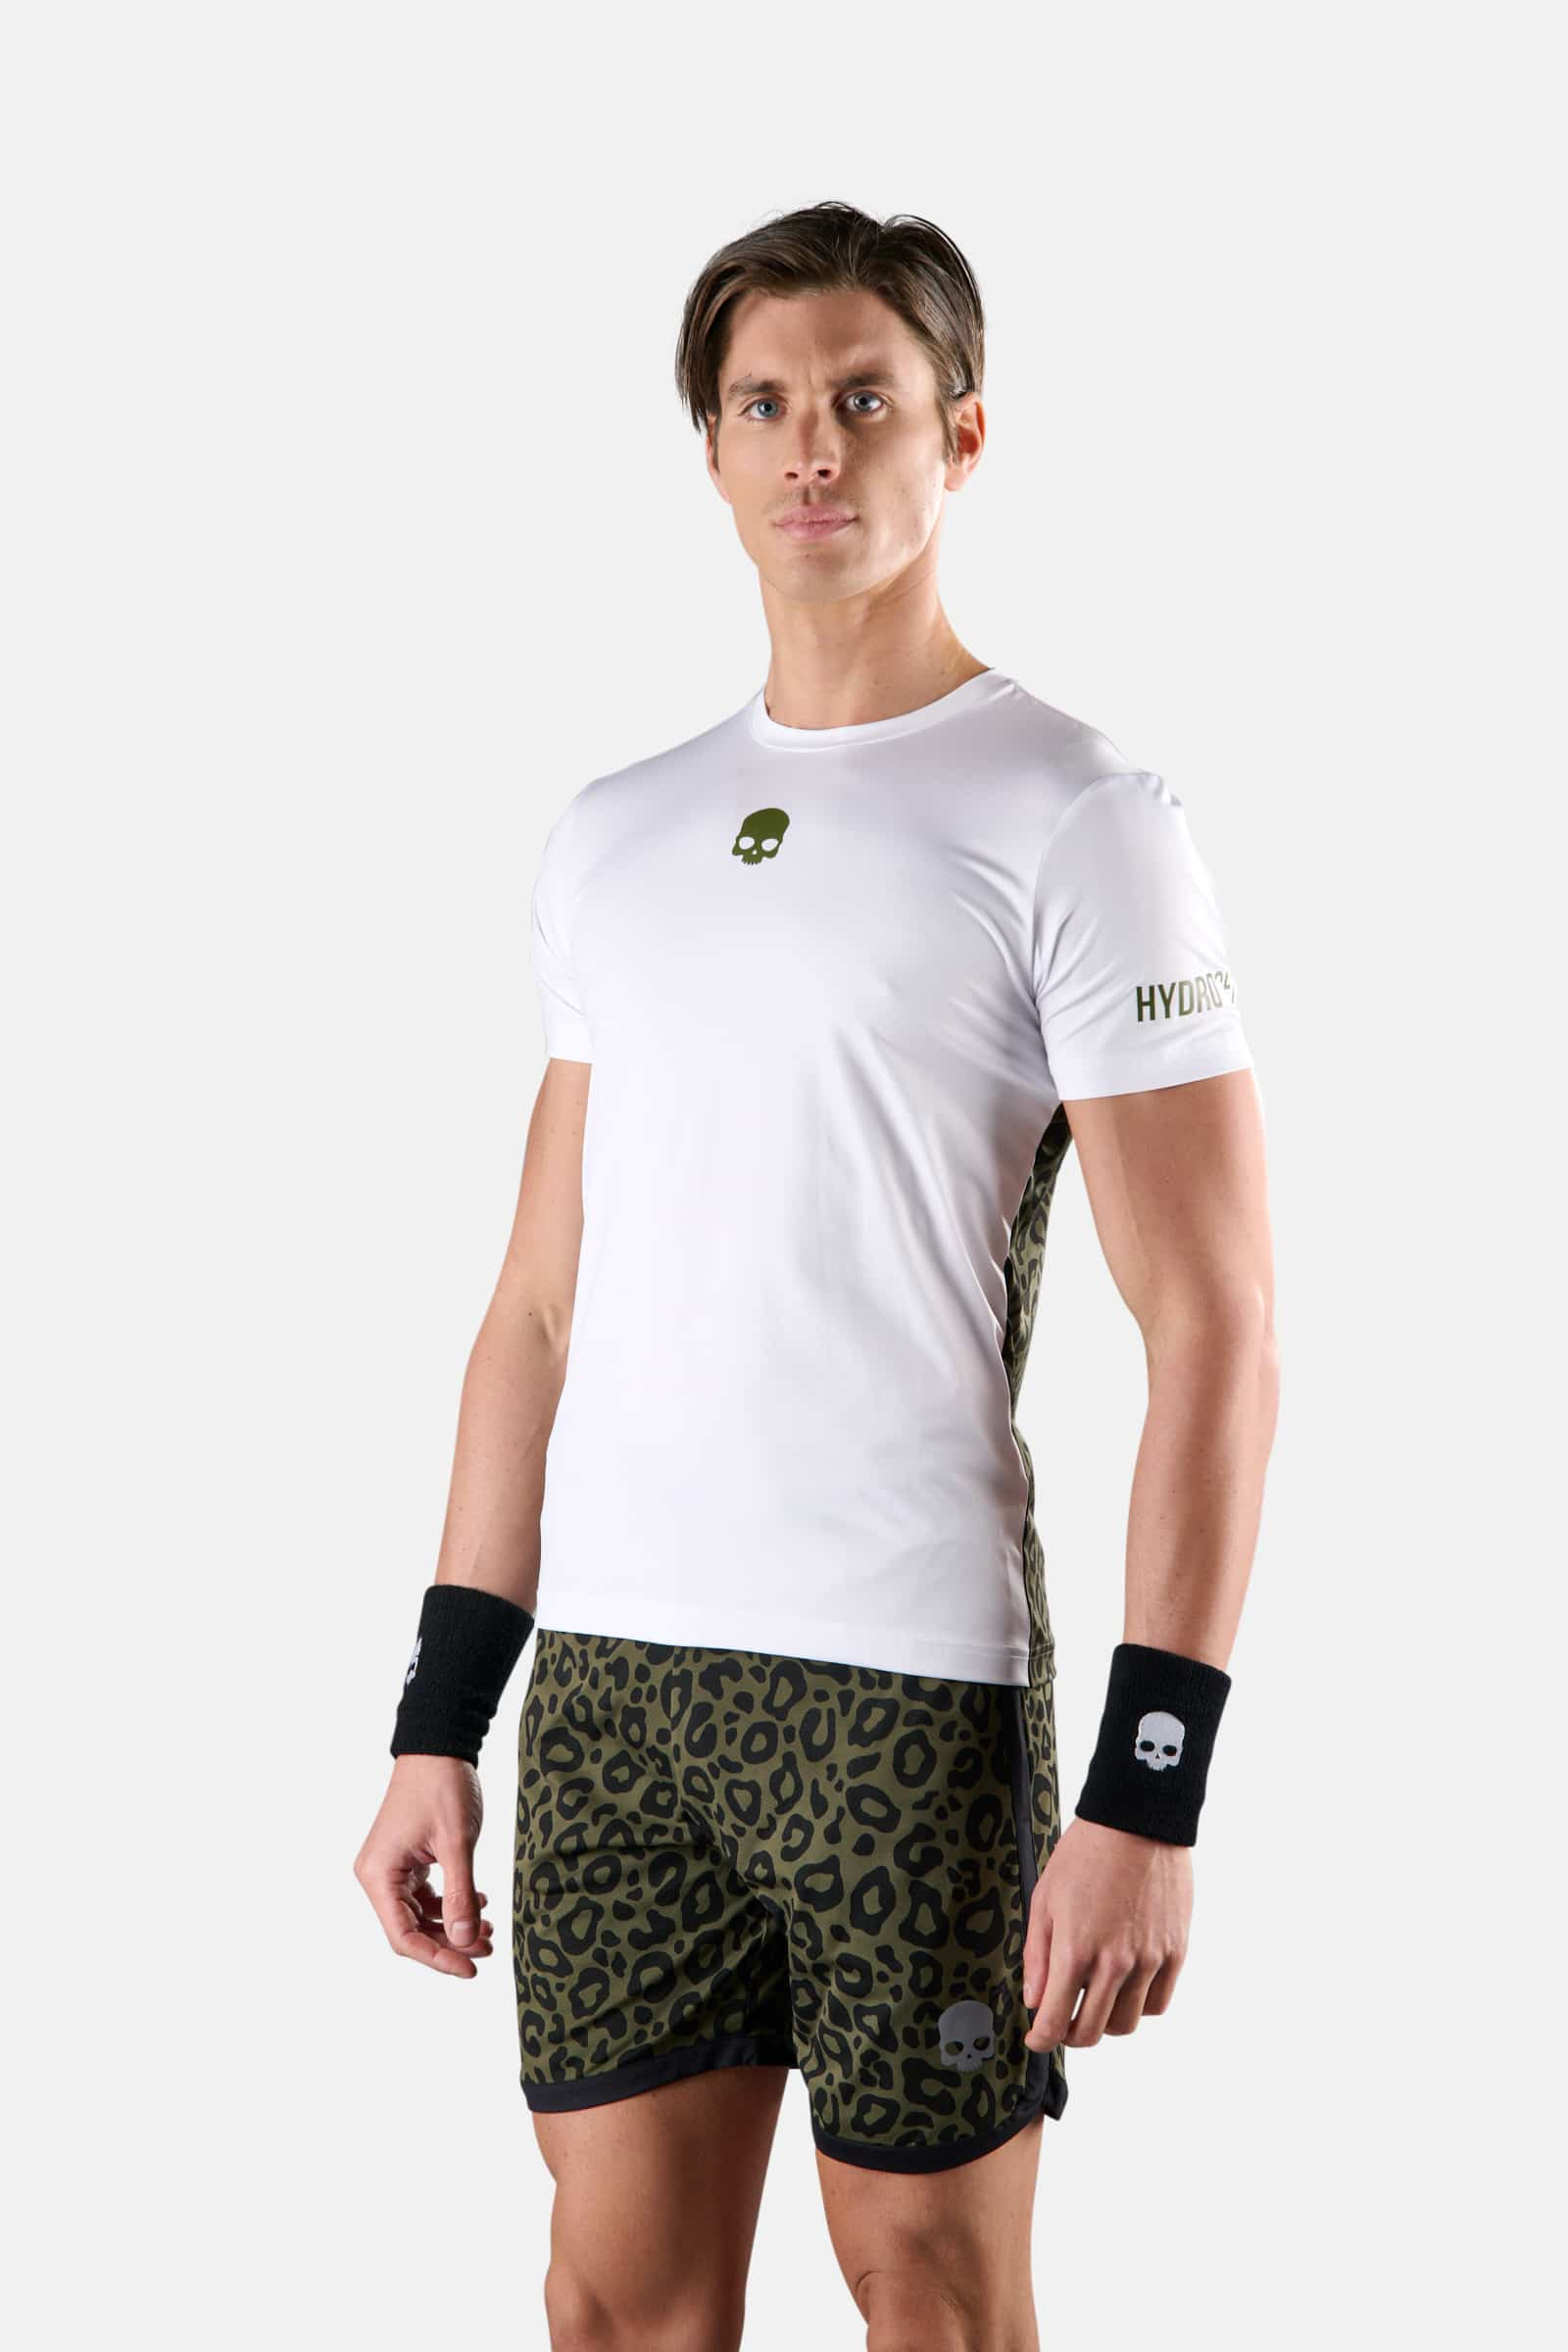 T-SHIRT TECNICA PANTHER - WHITE,MILITARY GREEN - Abbigliamento sportivo | Hydrogen